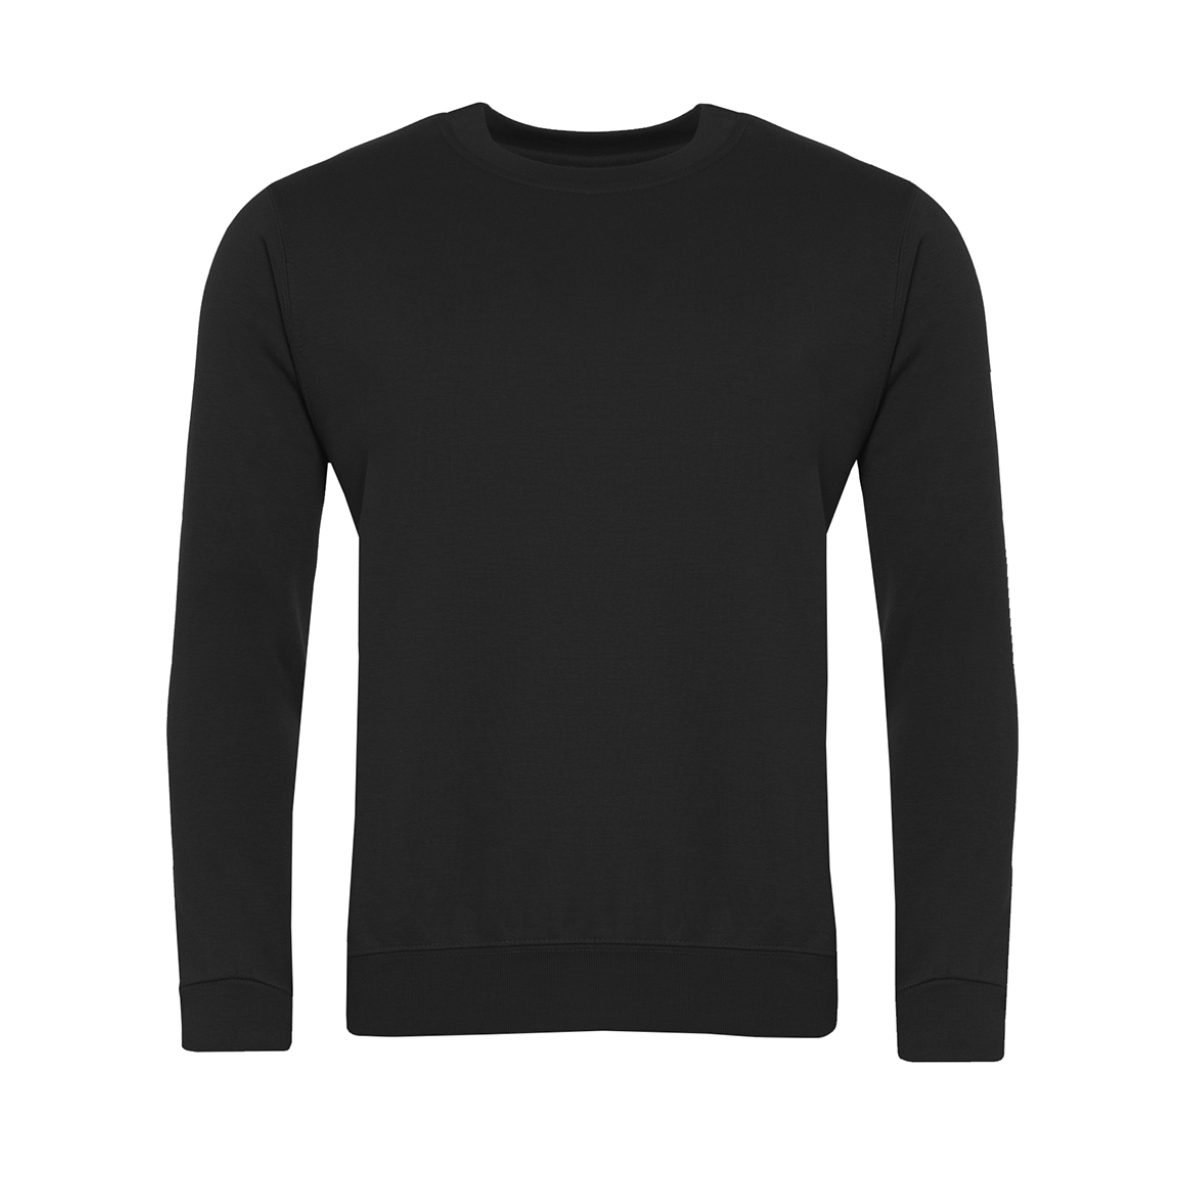 West Park Plain Black Games Sweatshirt - Schoolwear Solutions